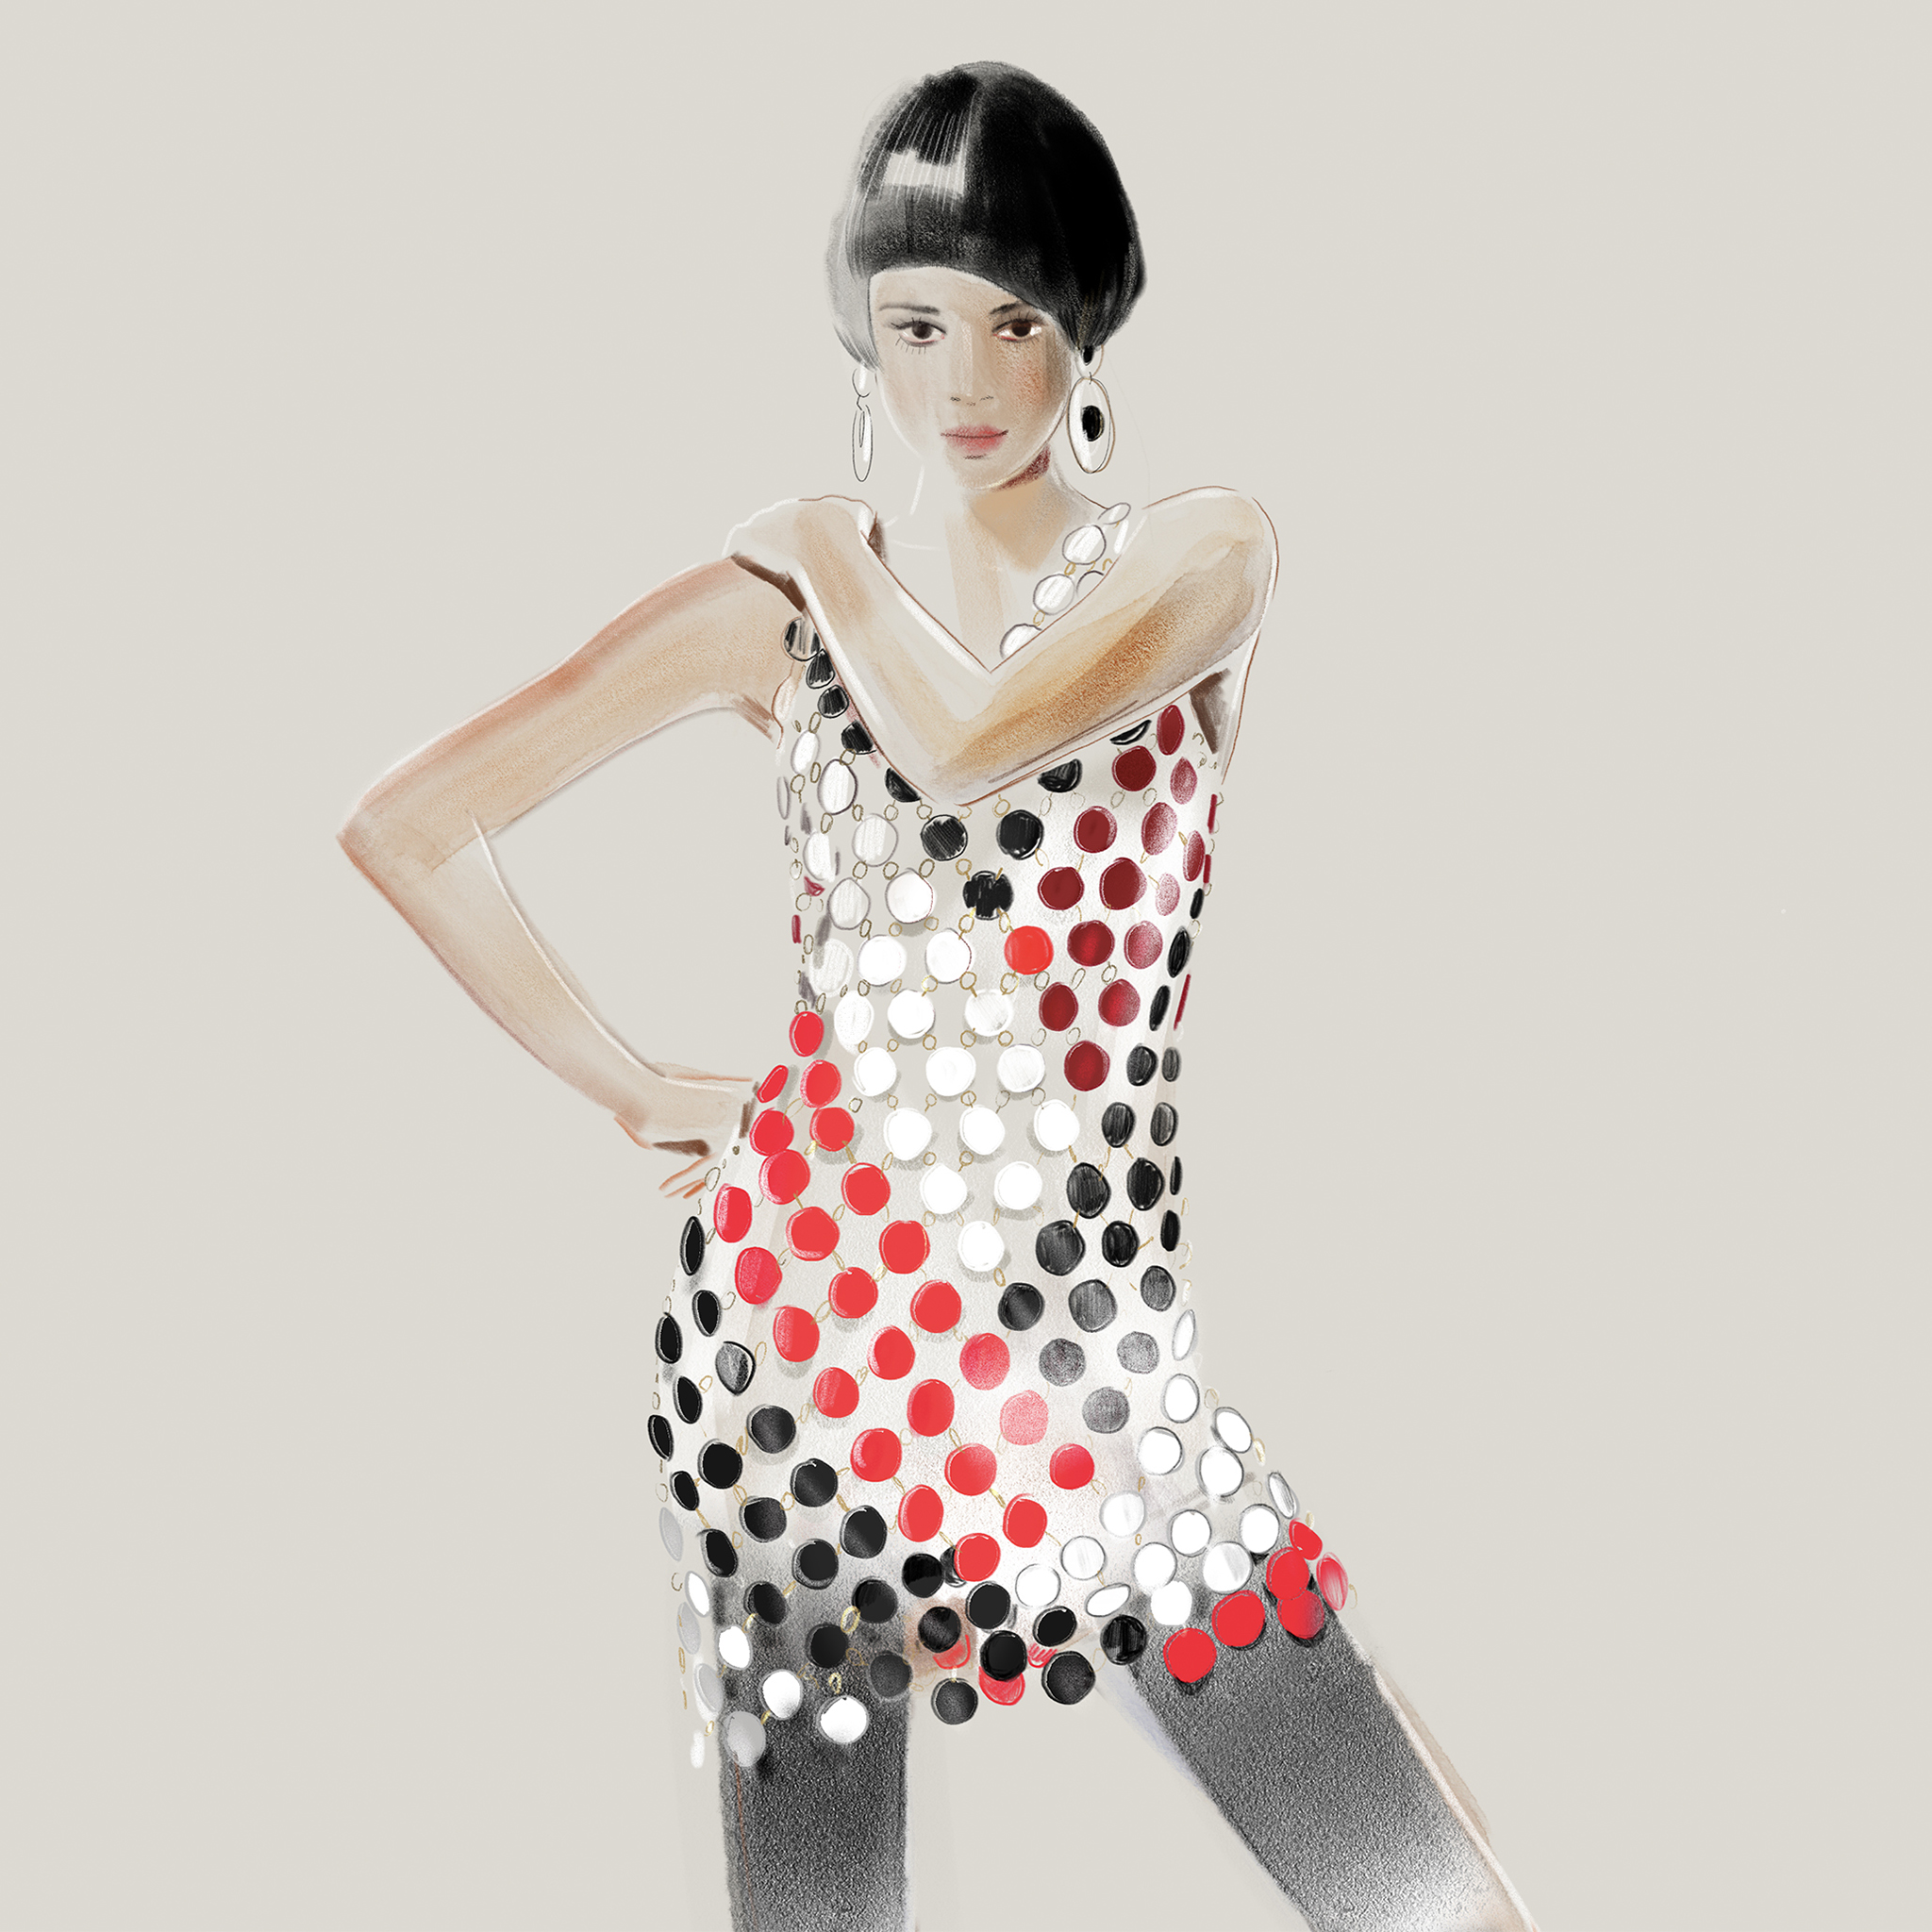 Paco Rabanne Disc Dress Lucy Truman Fashion Illustrator